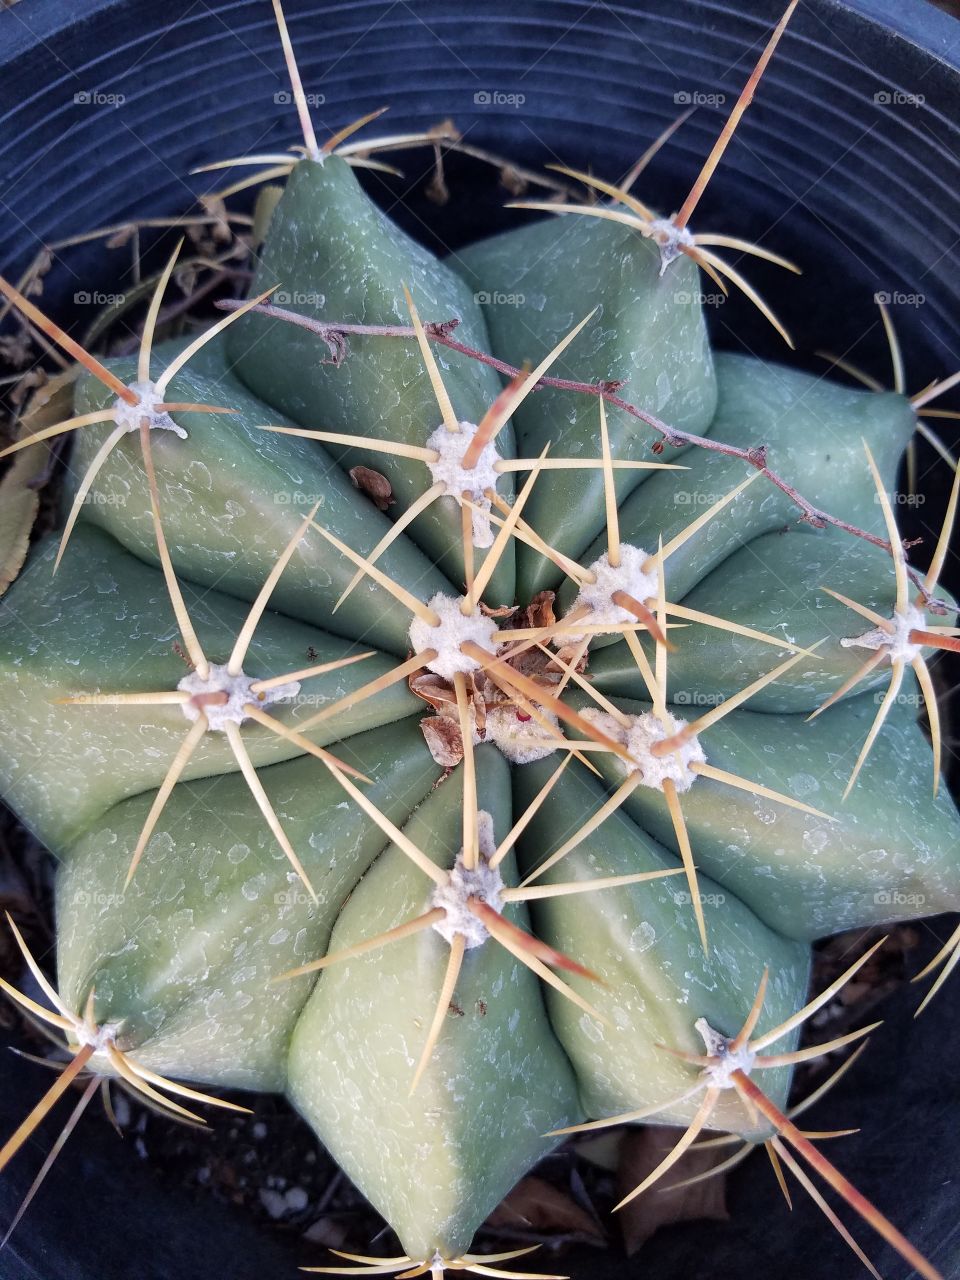 Sharp Cactus Thorns